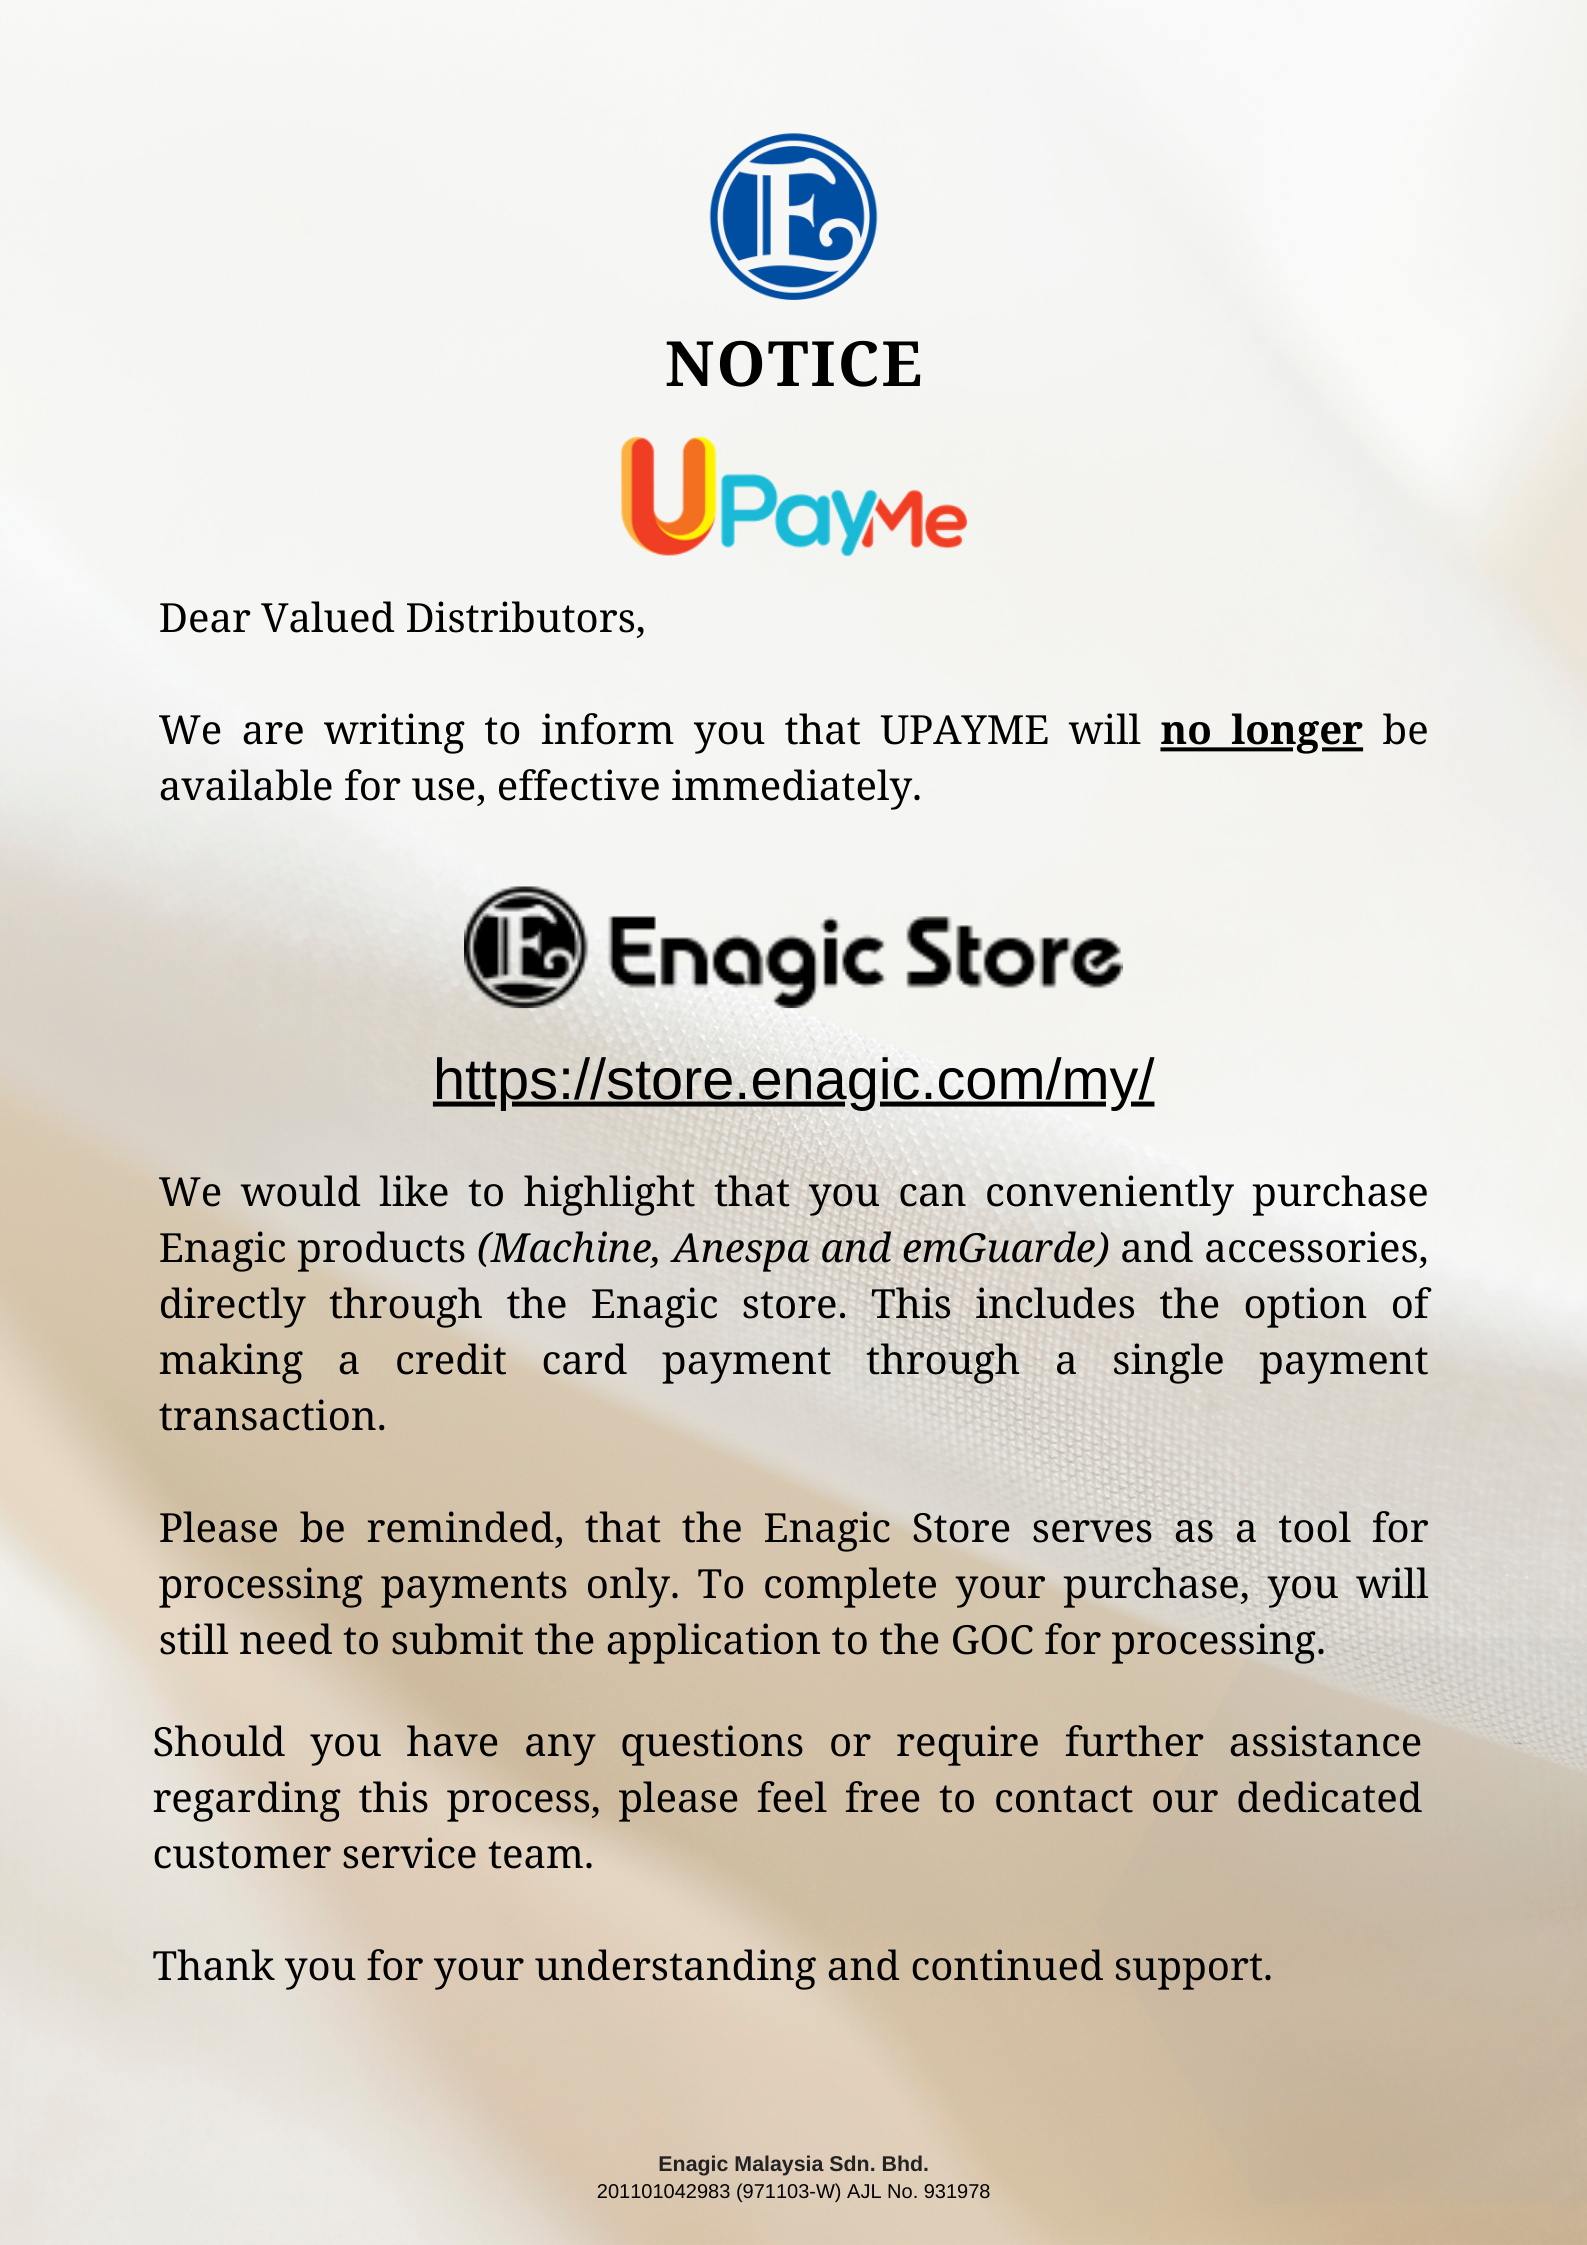 NOTICE | Purchasing Enagic Products Via Enagic Store